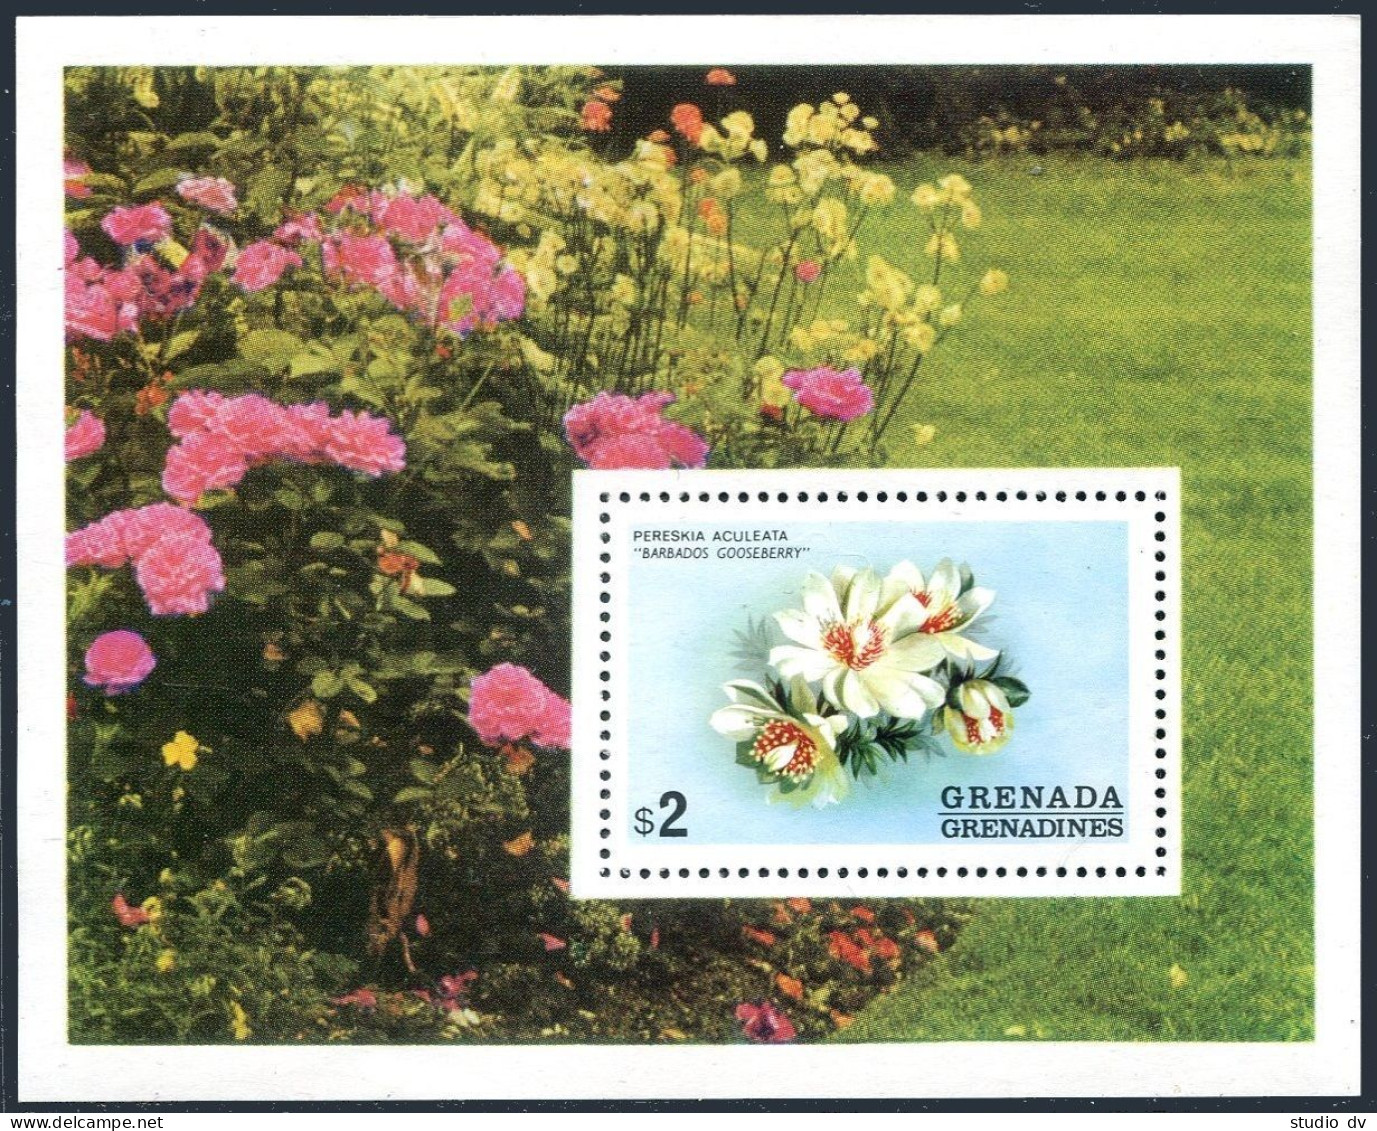 Grenada Gren 58, MNH. Michel 62 Bl.7. Flowers 1975. Barbados Gooseberry. - Grenada (1974-...)